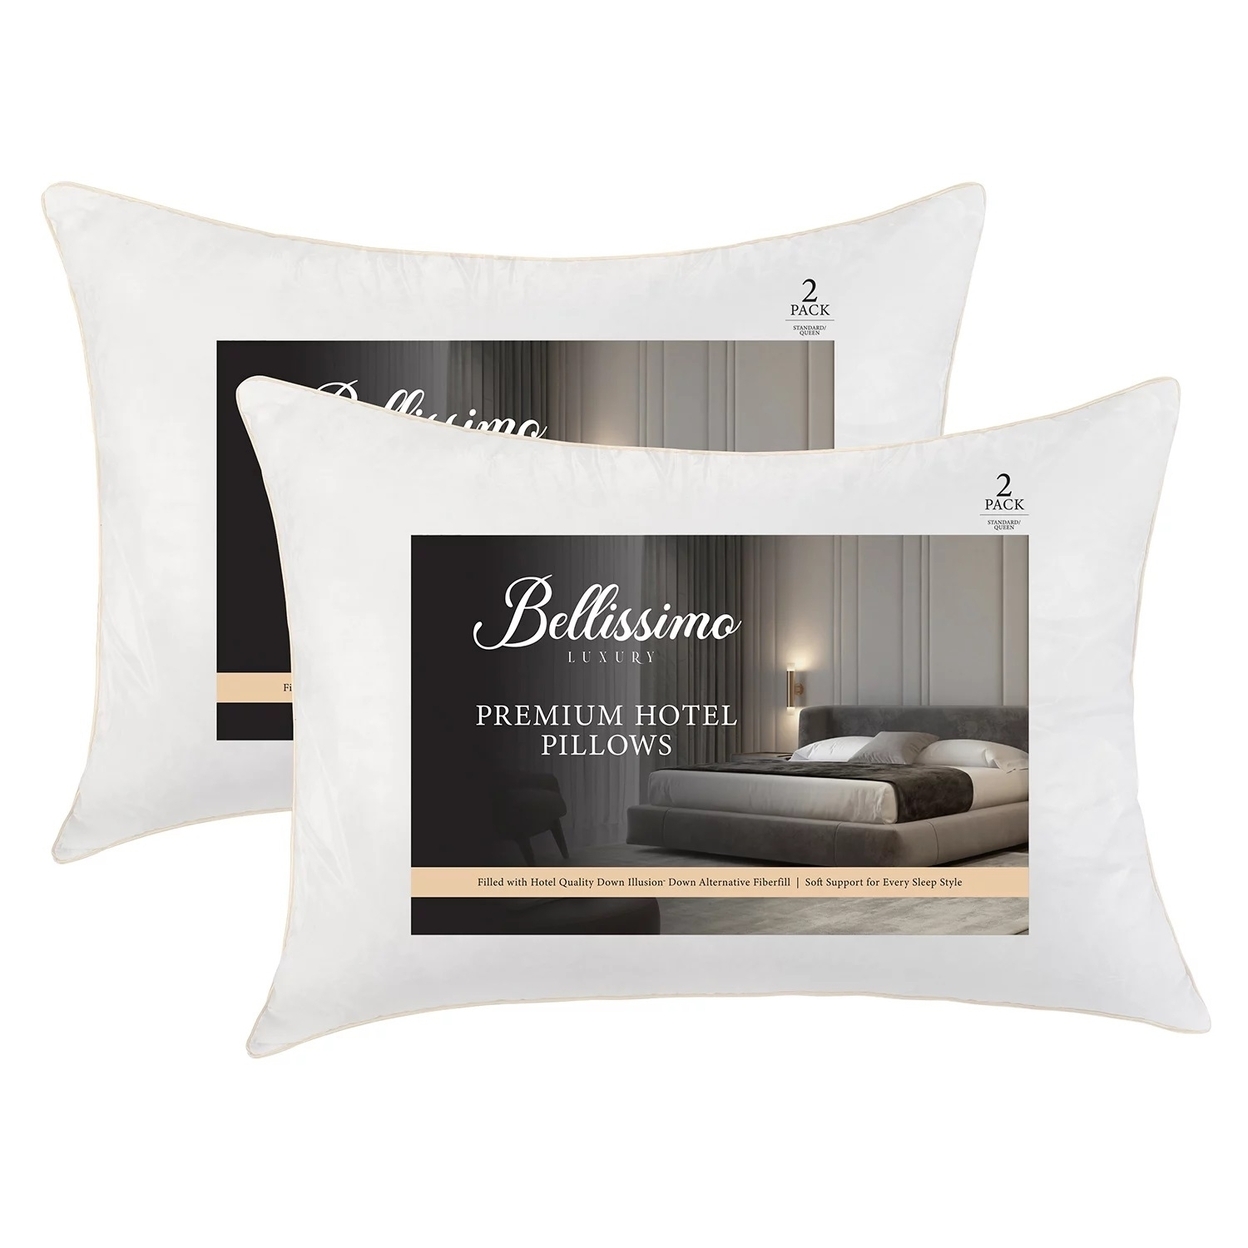 Bellissimo Premium Luxury Hotel Bed Pillow, Standard/Queen (2 Pack)